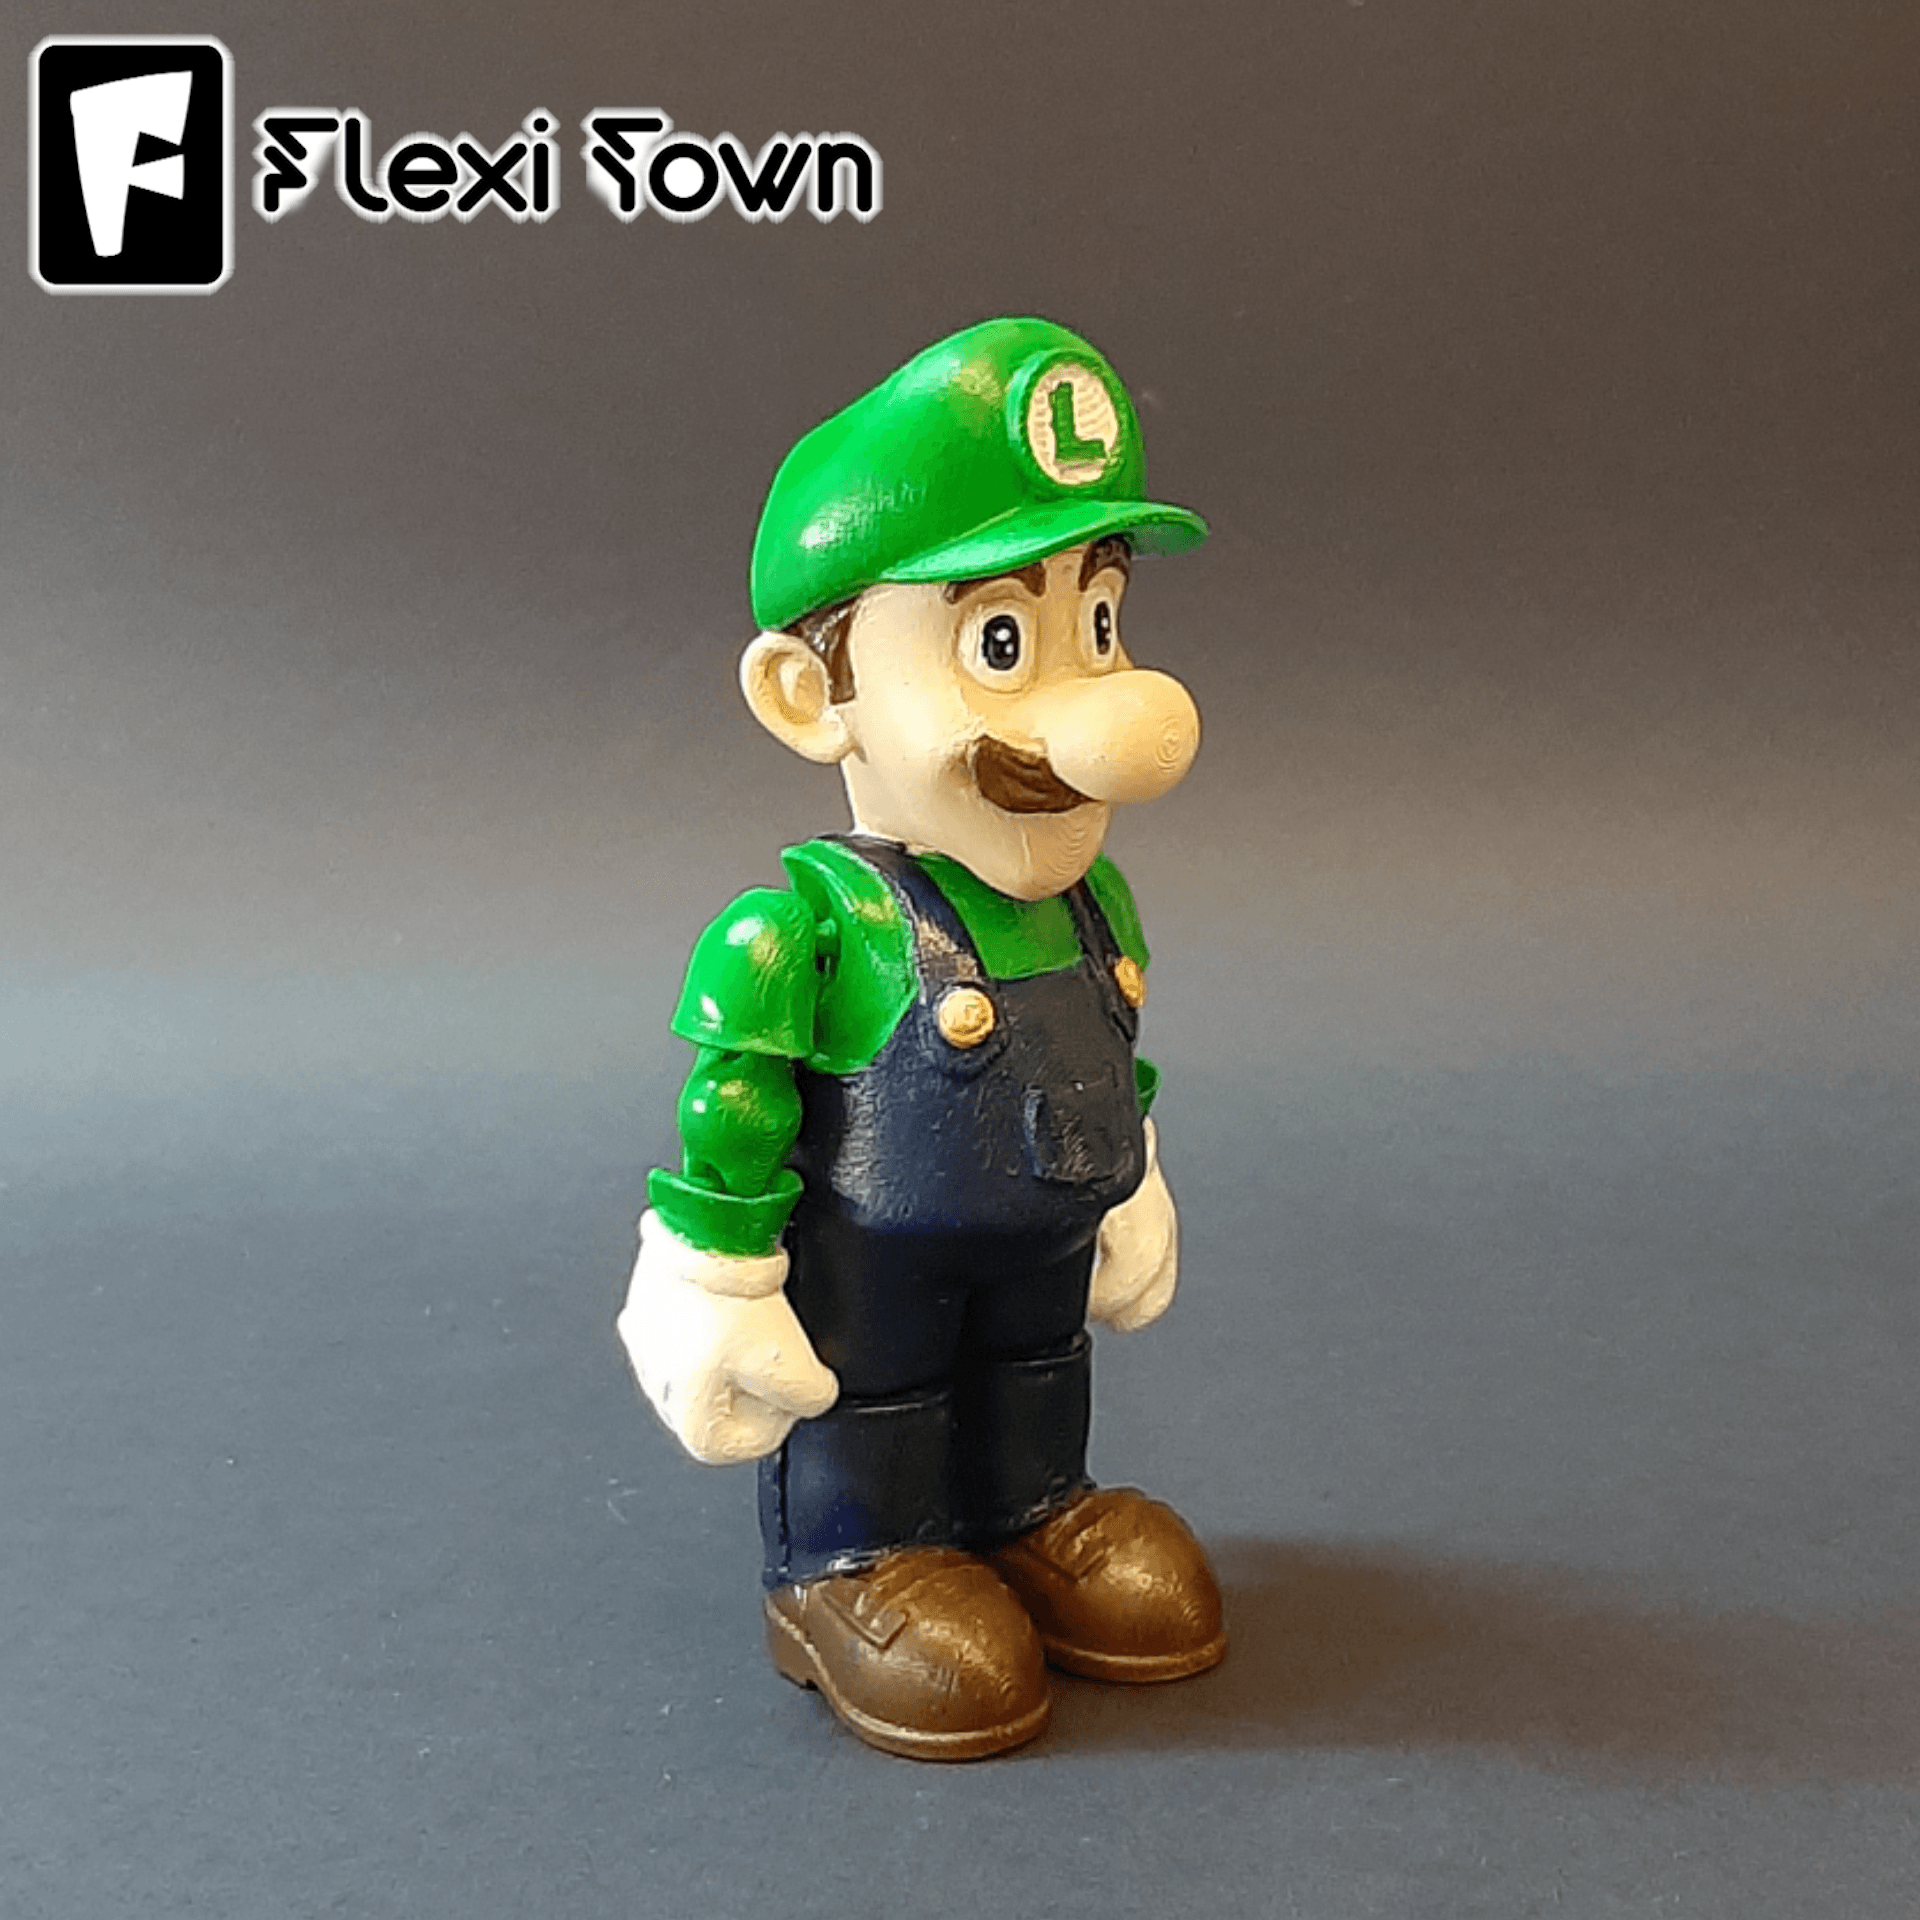 Flexi Print-in-Place Luigi 3d model